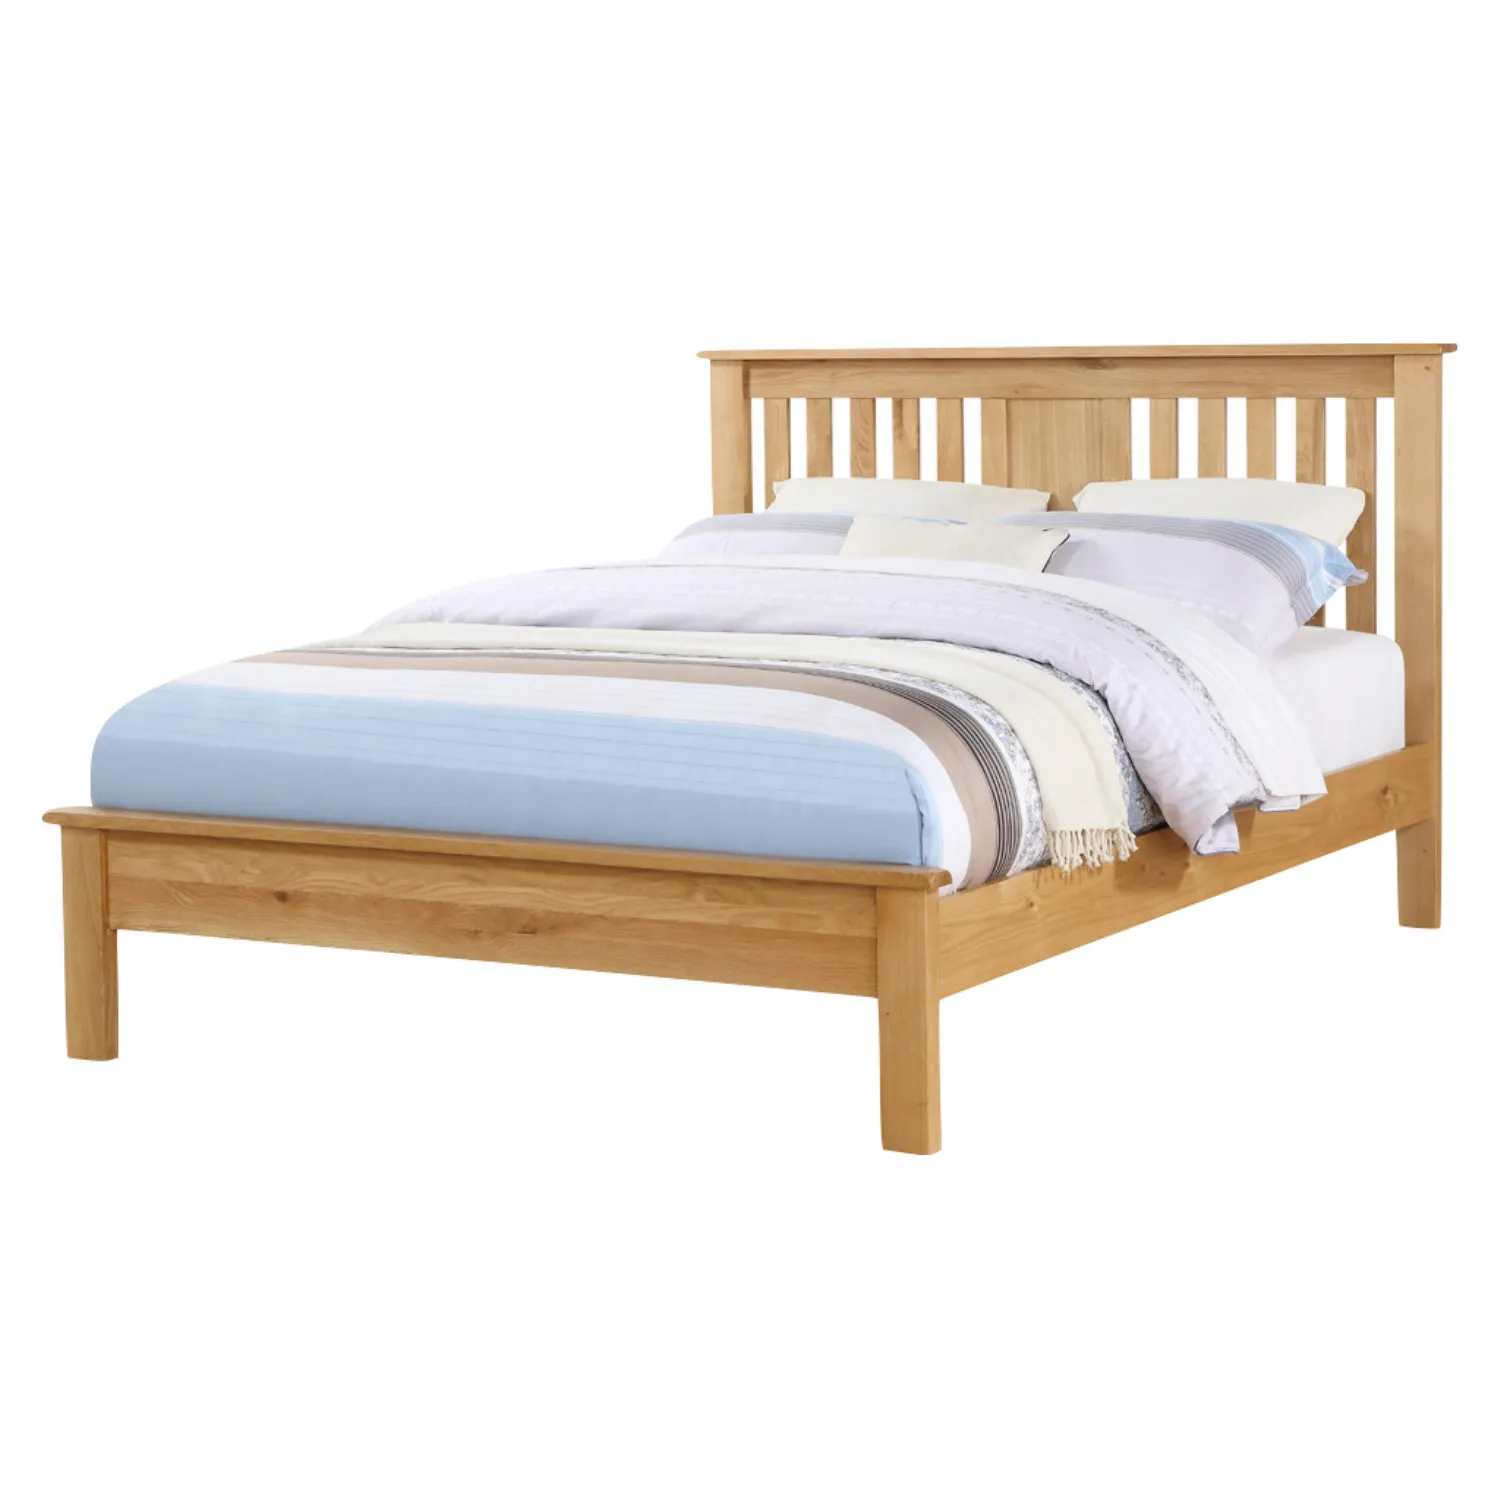 Solid Oak 4ft 6 Bed Low End Bed